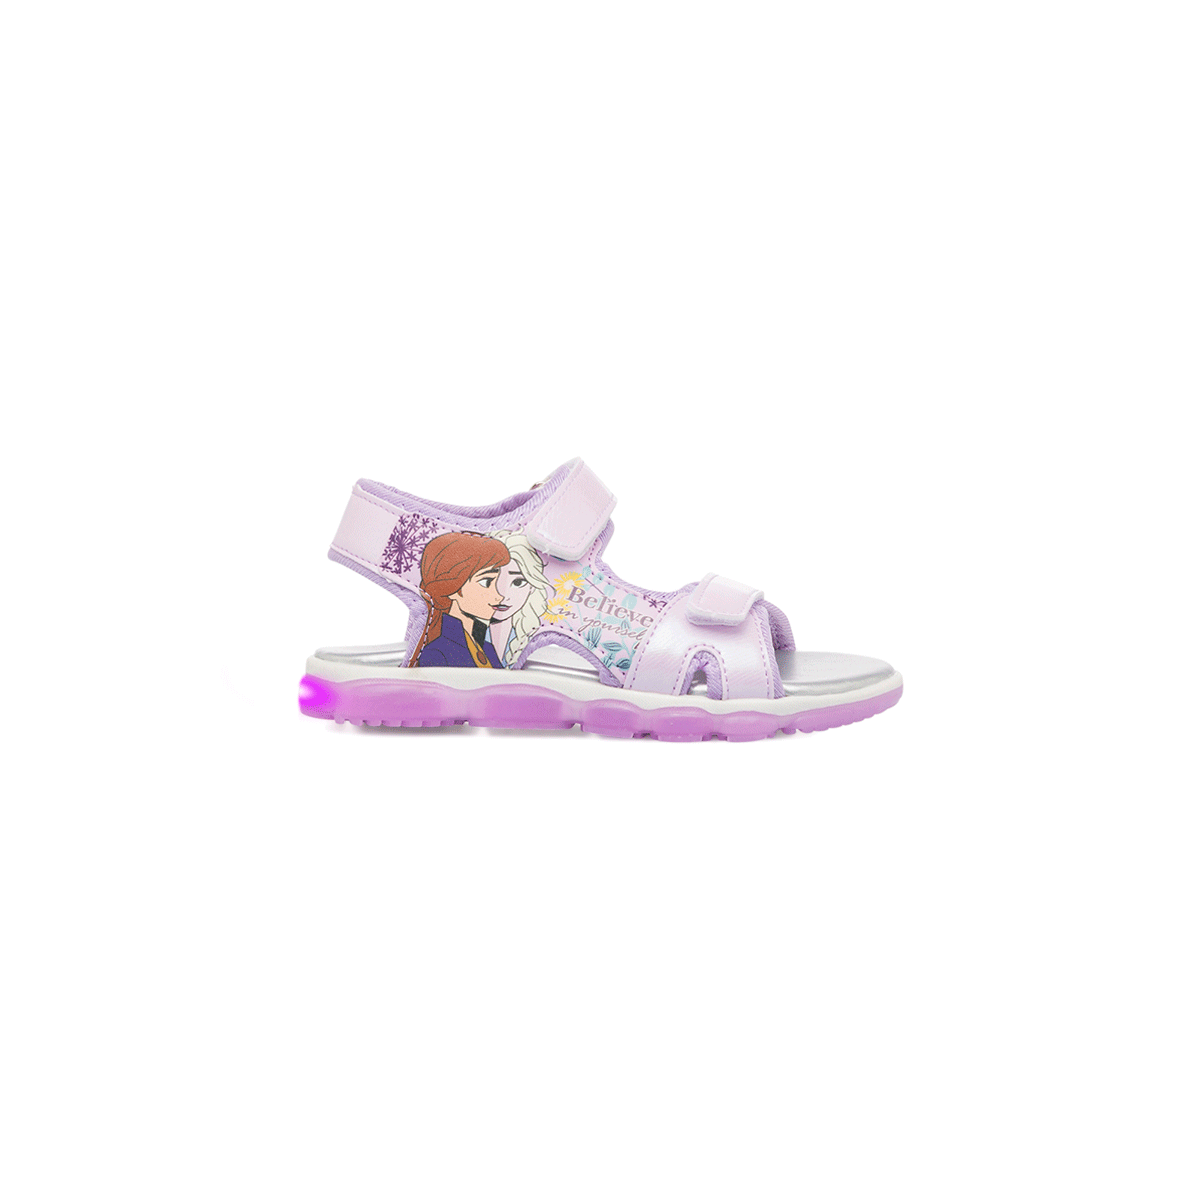 Sandali da bambina lilla con luci e stampa Frozen, Scarpe Bambini, SKU k283000424, Immagine 0